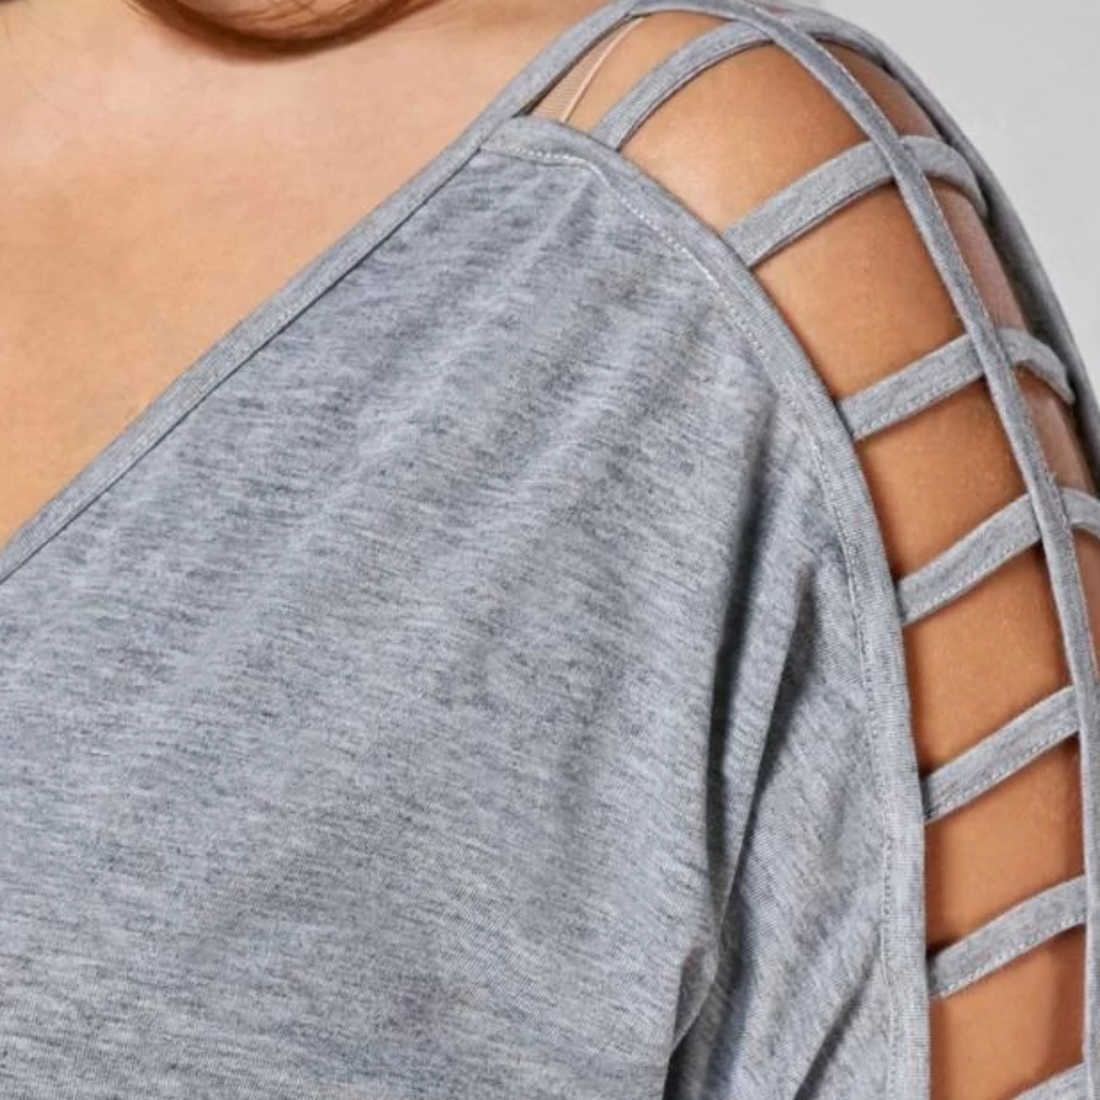 Women's Summer Casual Cotton V-Neck T-Shirt | Plus Size